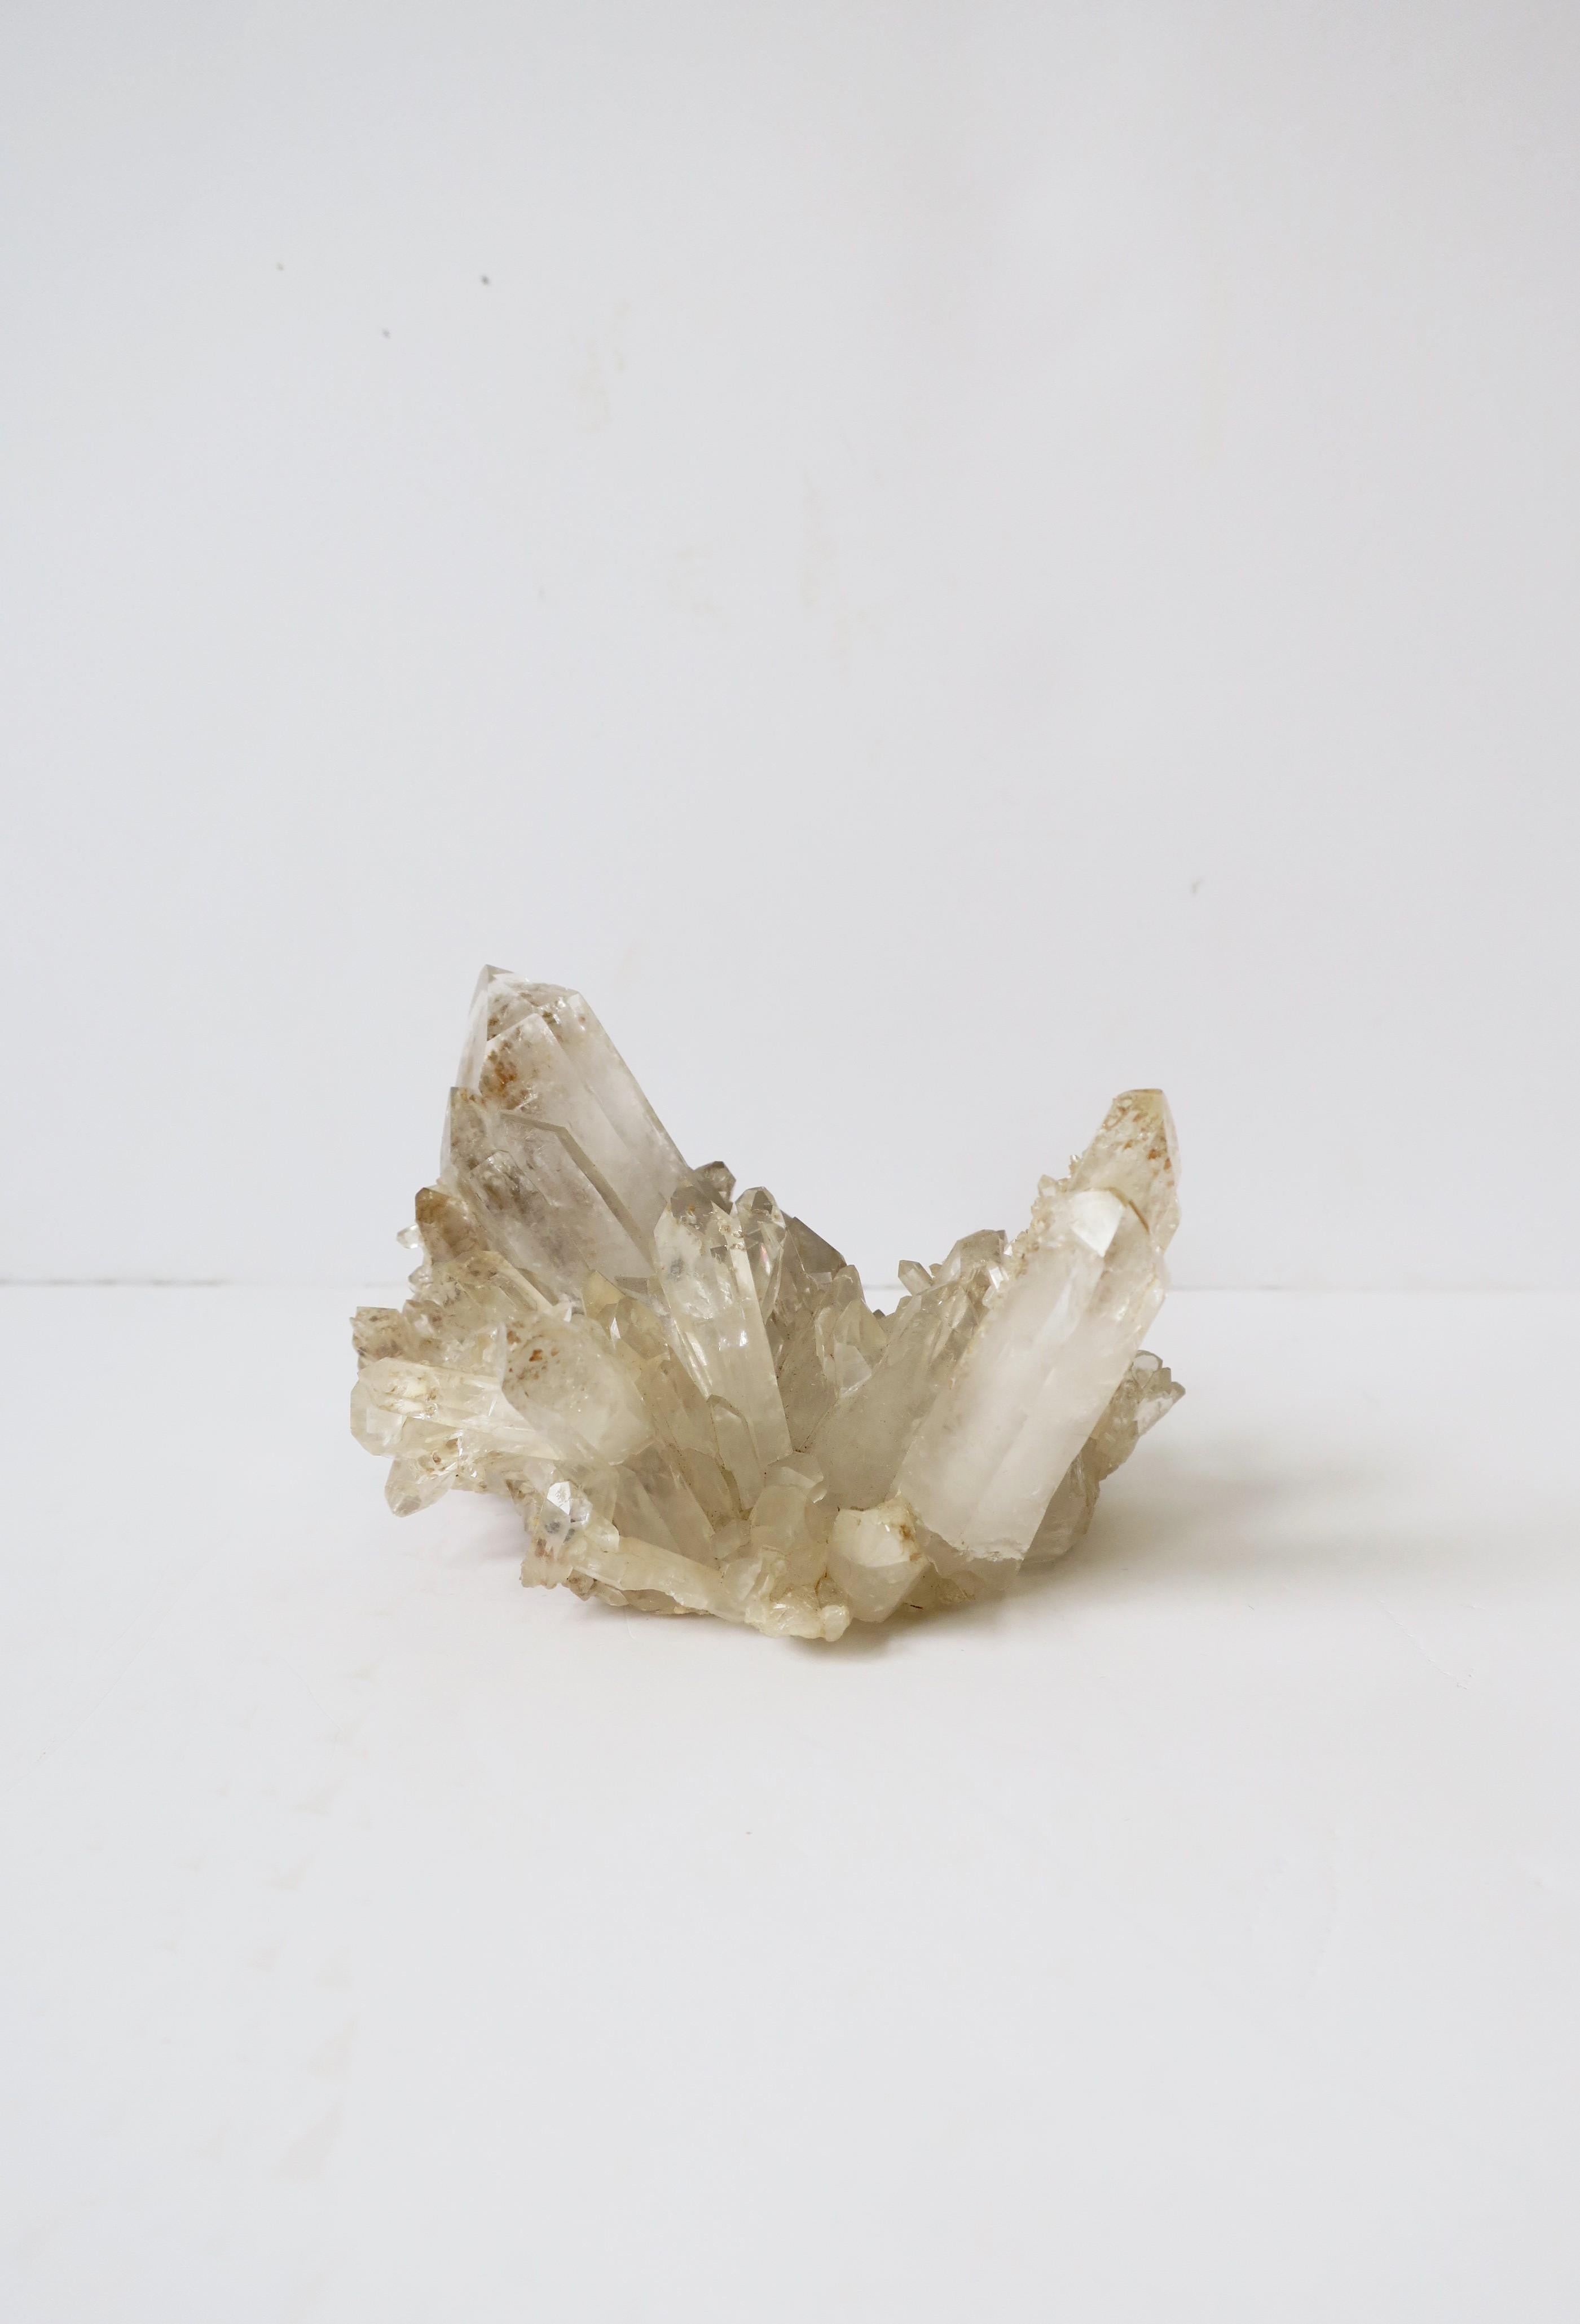 Un spécimen naturel de cristal de roche aka quartz clair, objet décoratif. 

Dimensions : 3.5